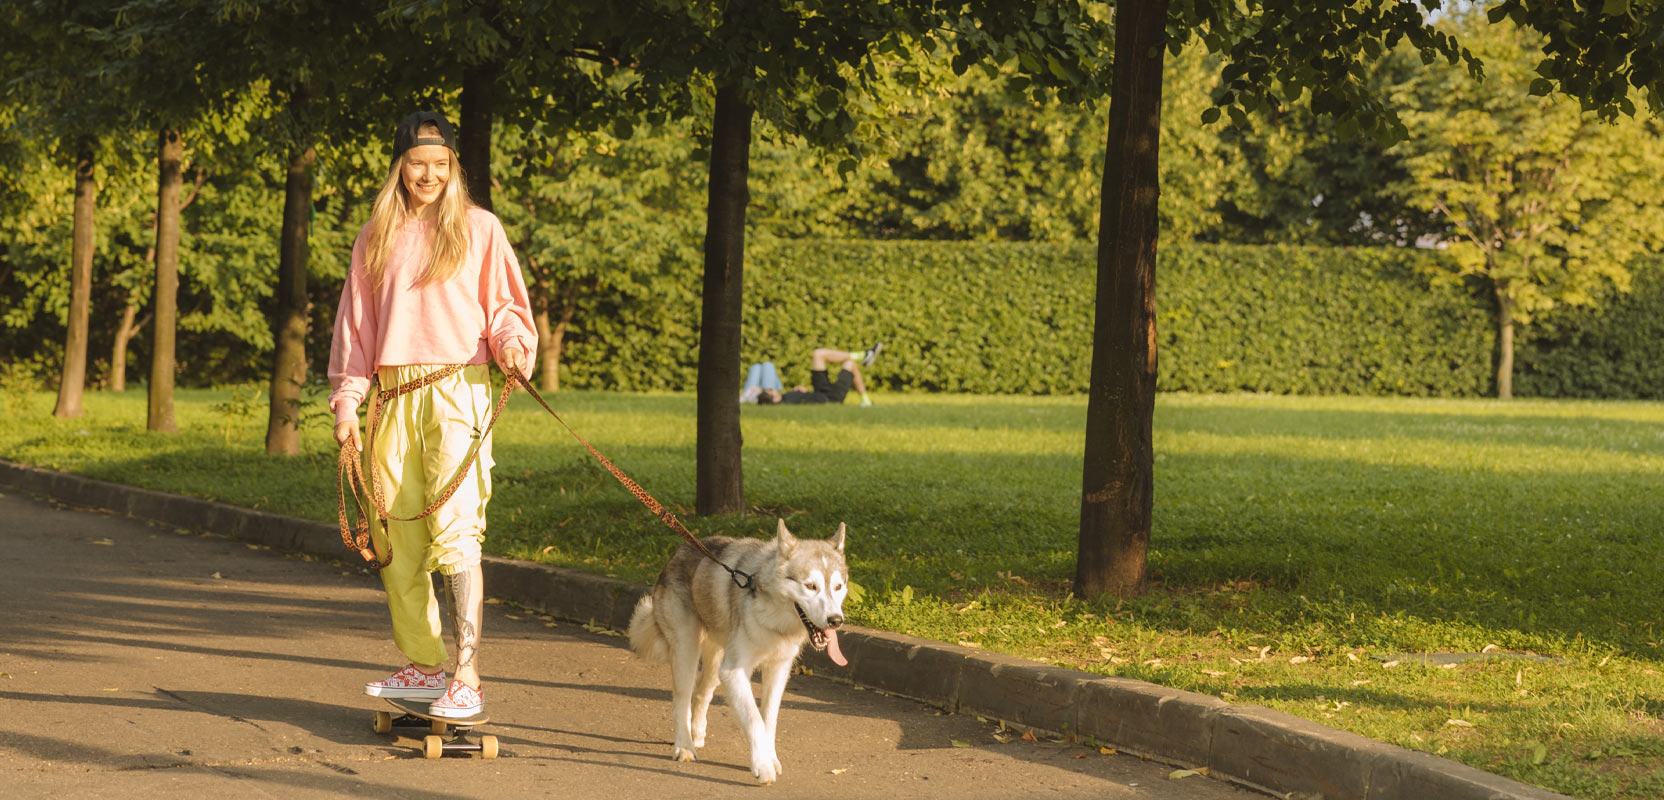 Girl on a skateboard walking a dog on a leash